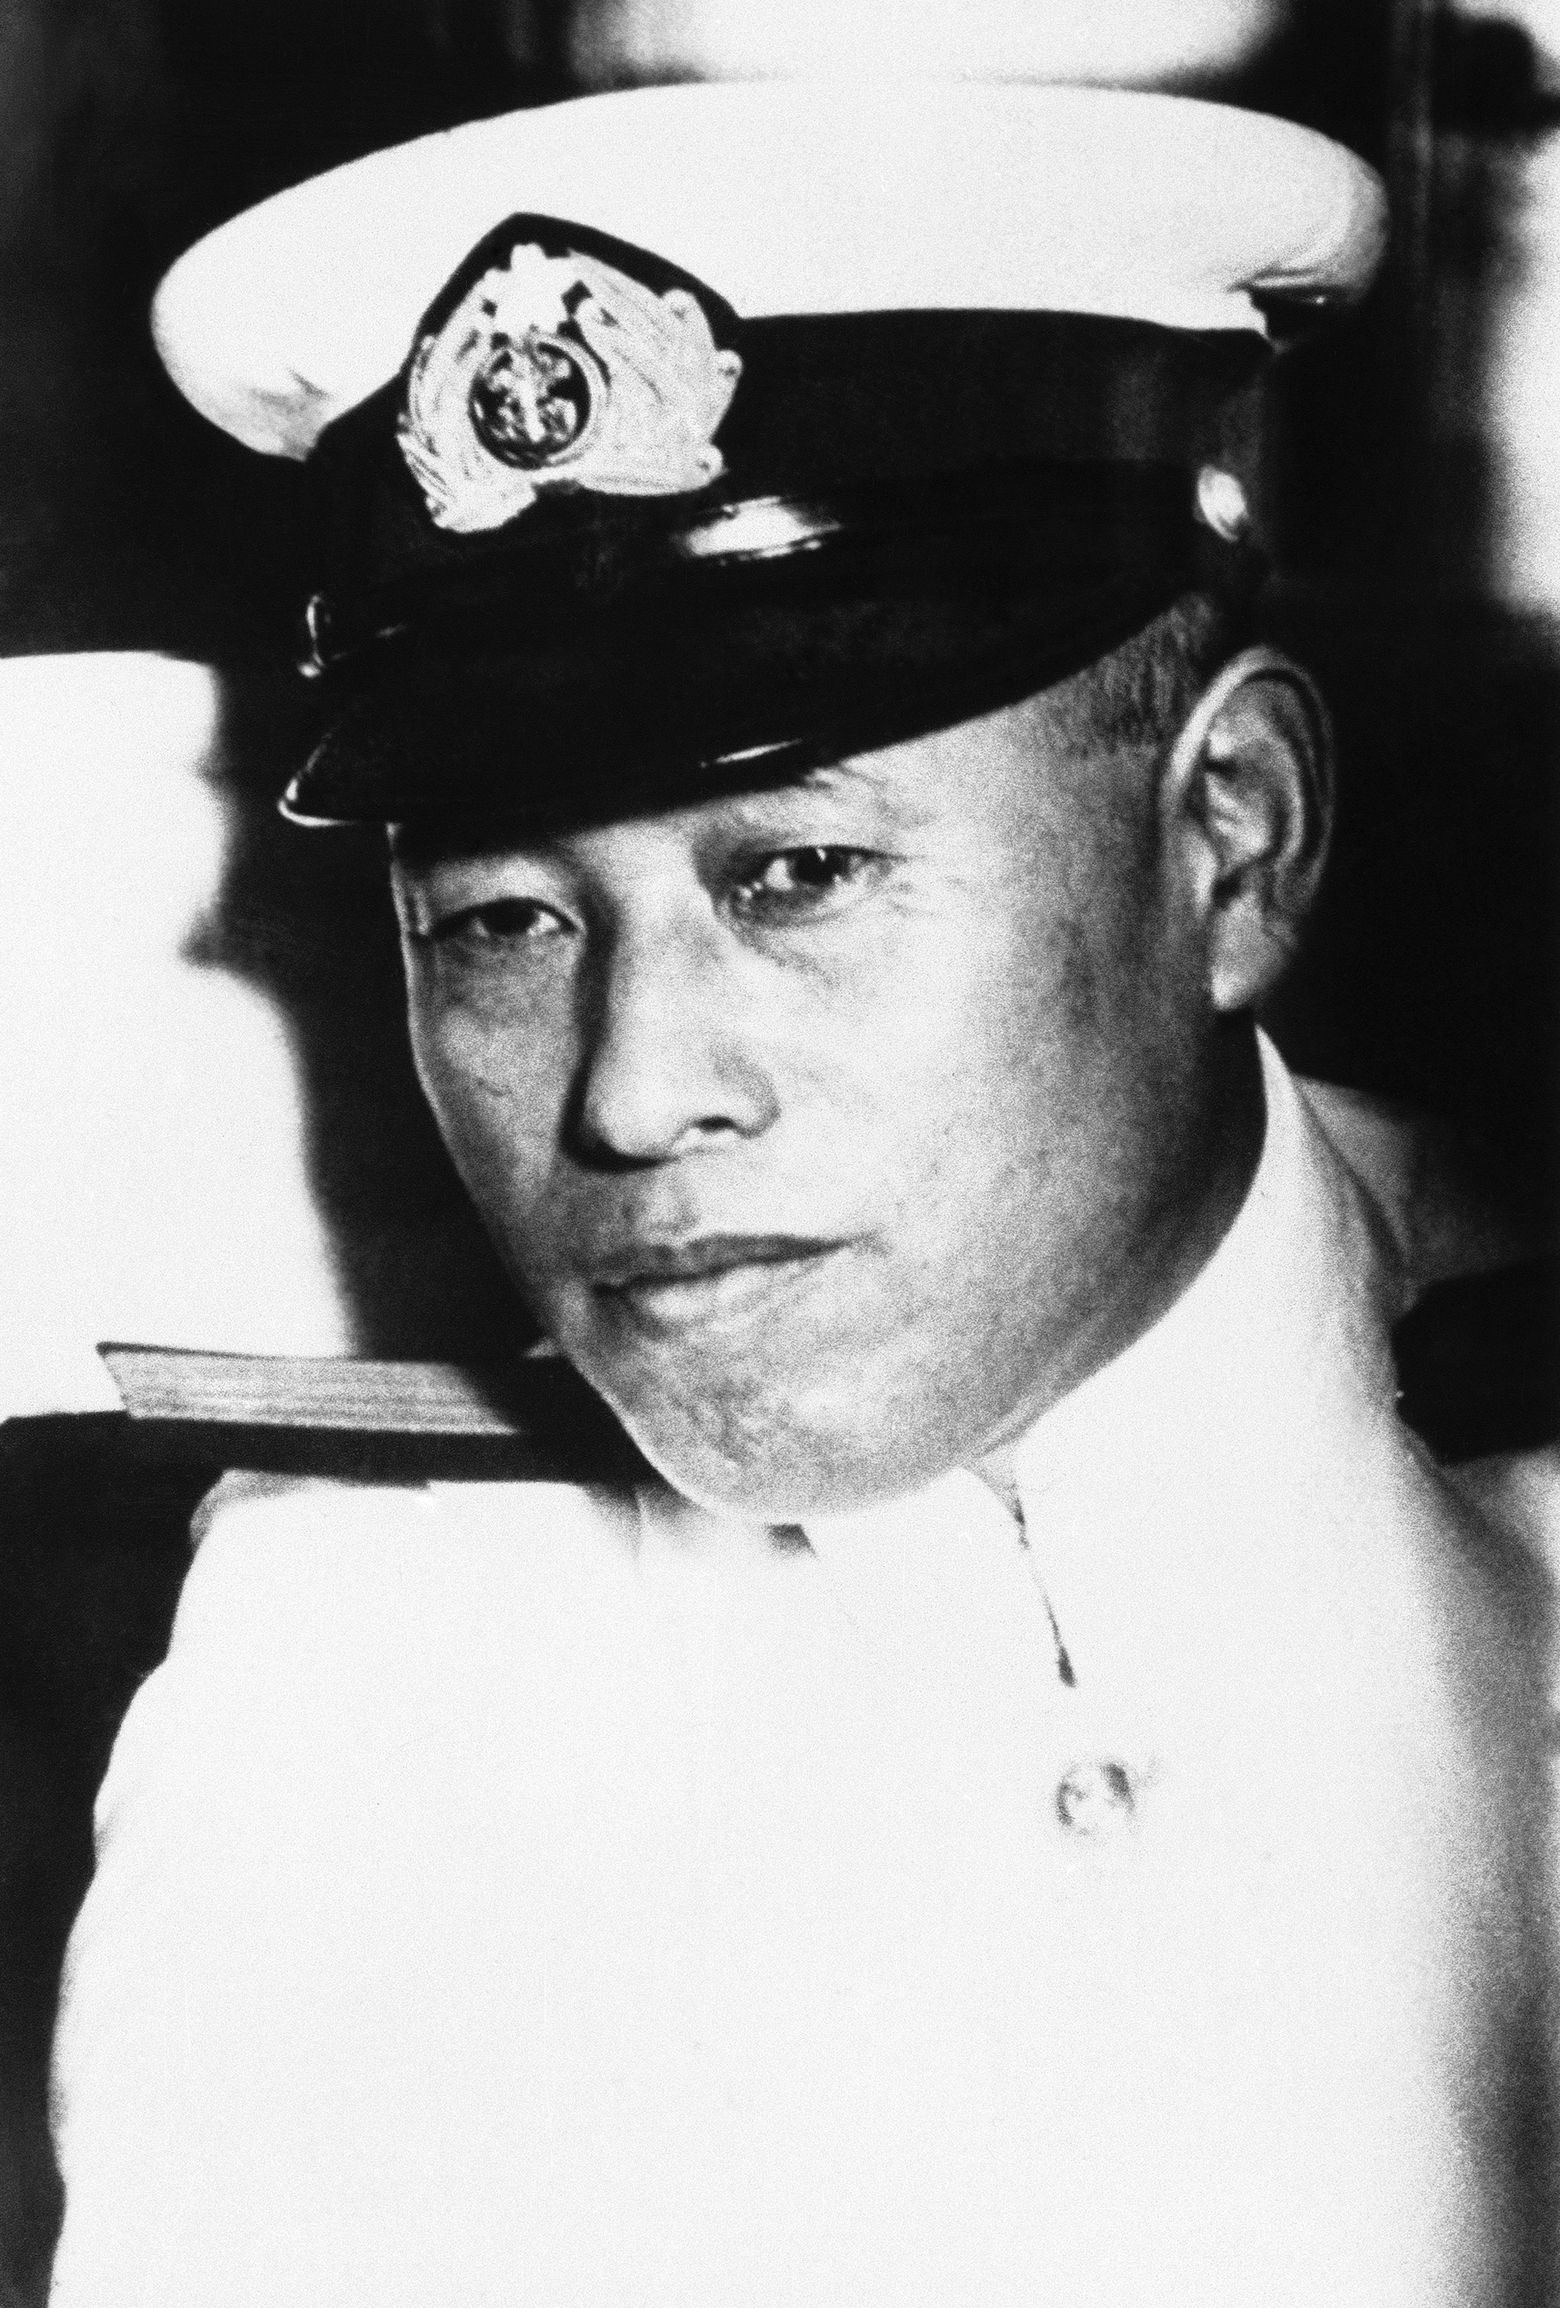 New World War II Photo: Japanese Marshal Admiral Isoroku Yamamoto